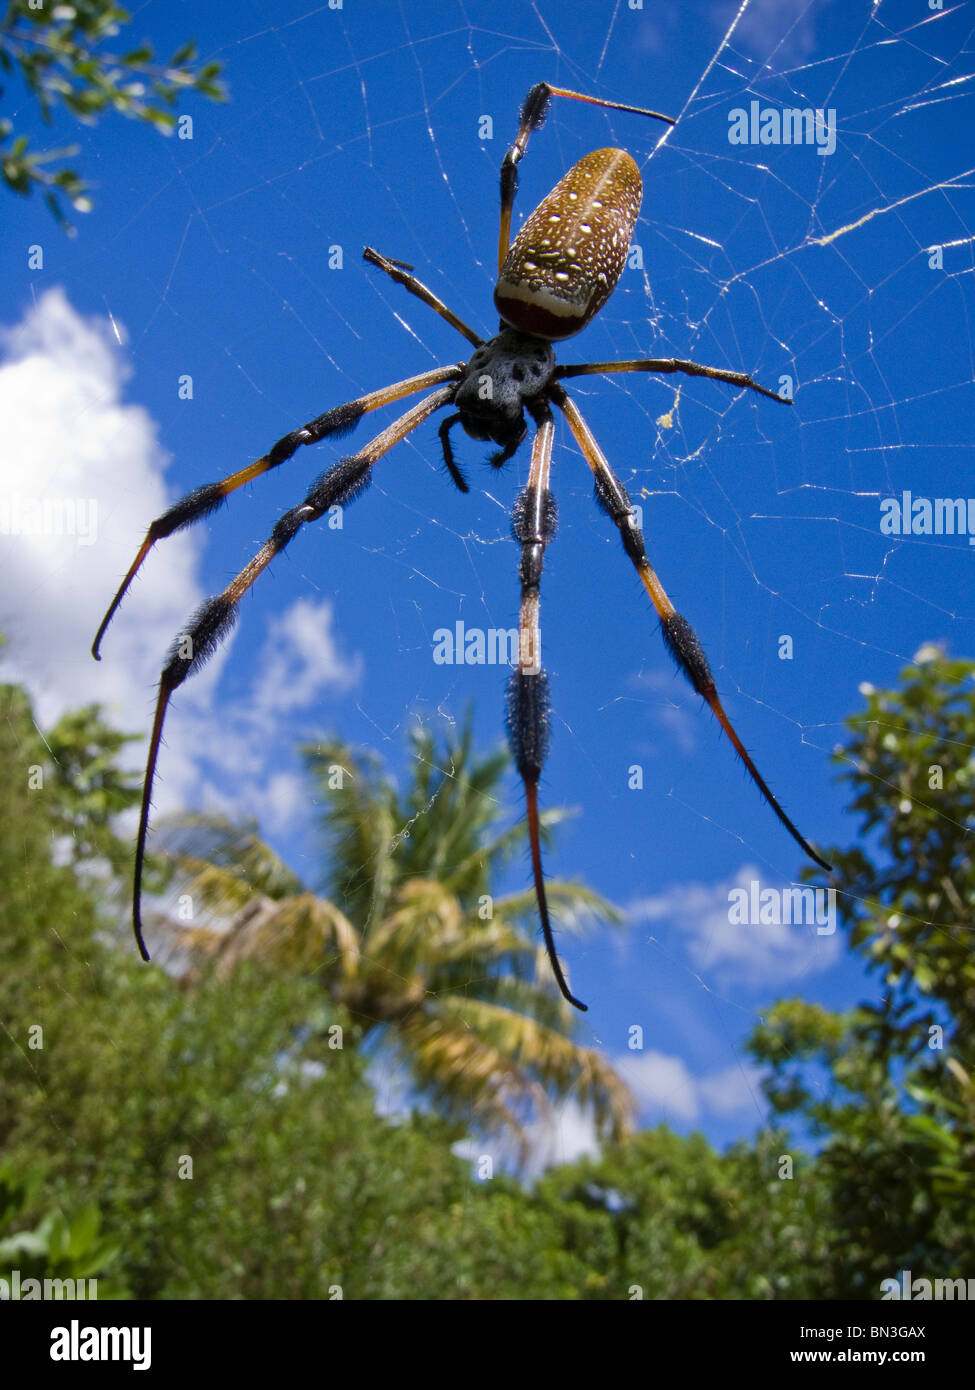 [N. California] Golden Gate Park micro spider : r/whatsthisbug